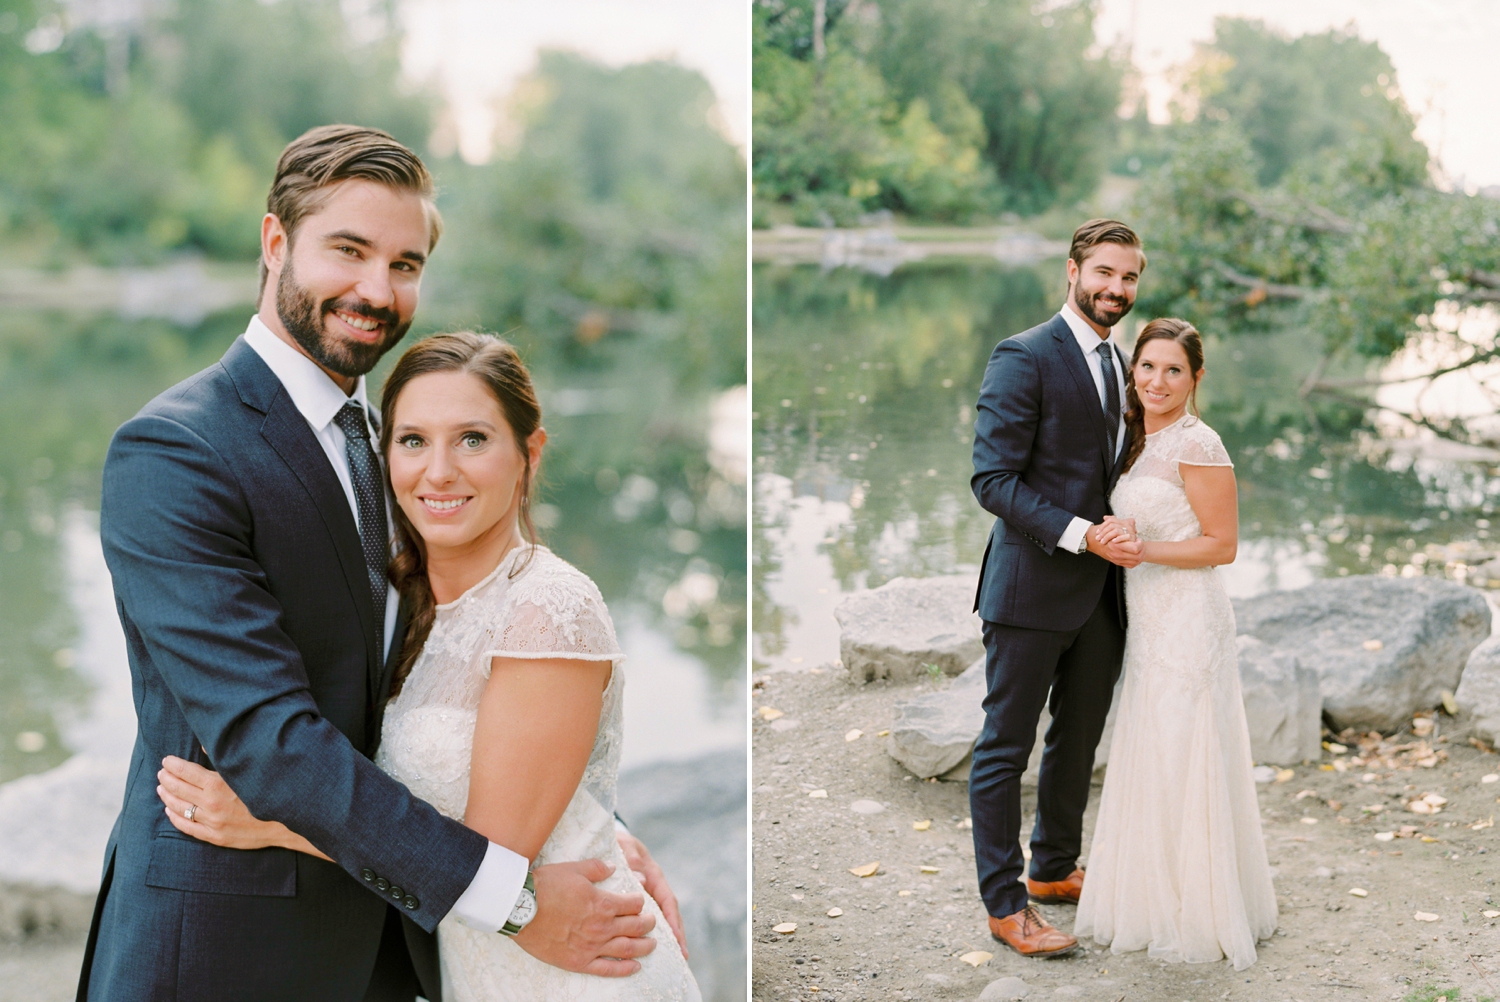 Calgary wedding photographers | fine art film | Justine Milton Photography | wedding inspiration | wedding dress | bride and groom portraits | river